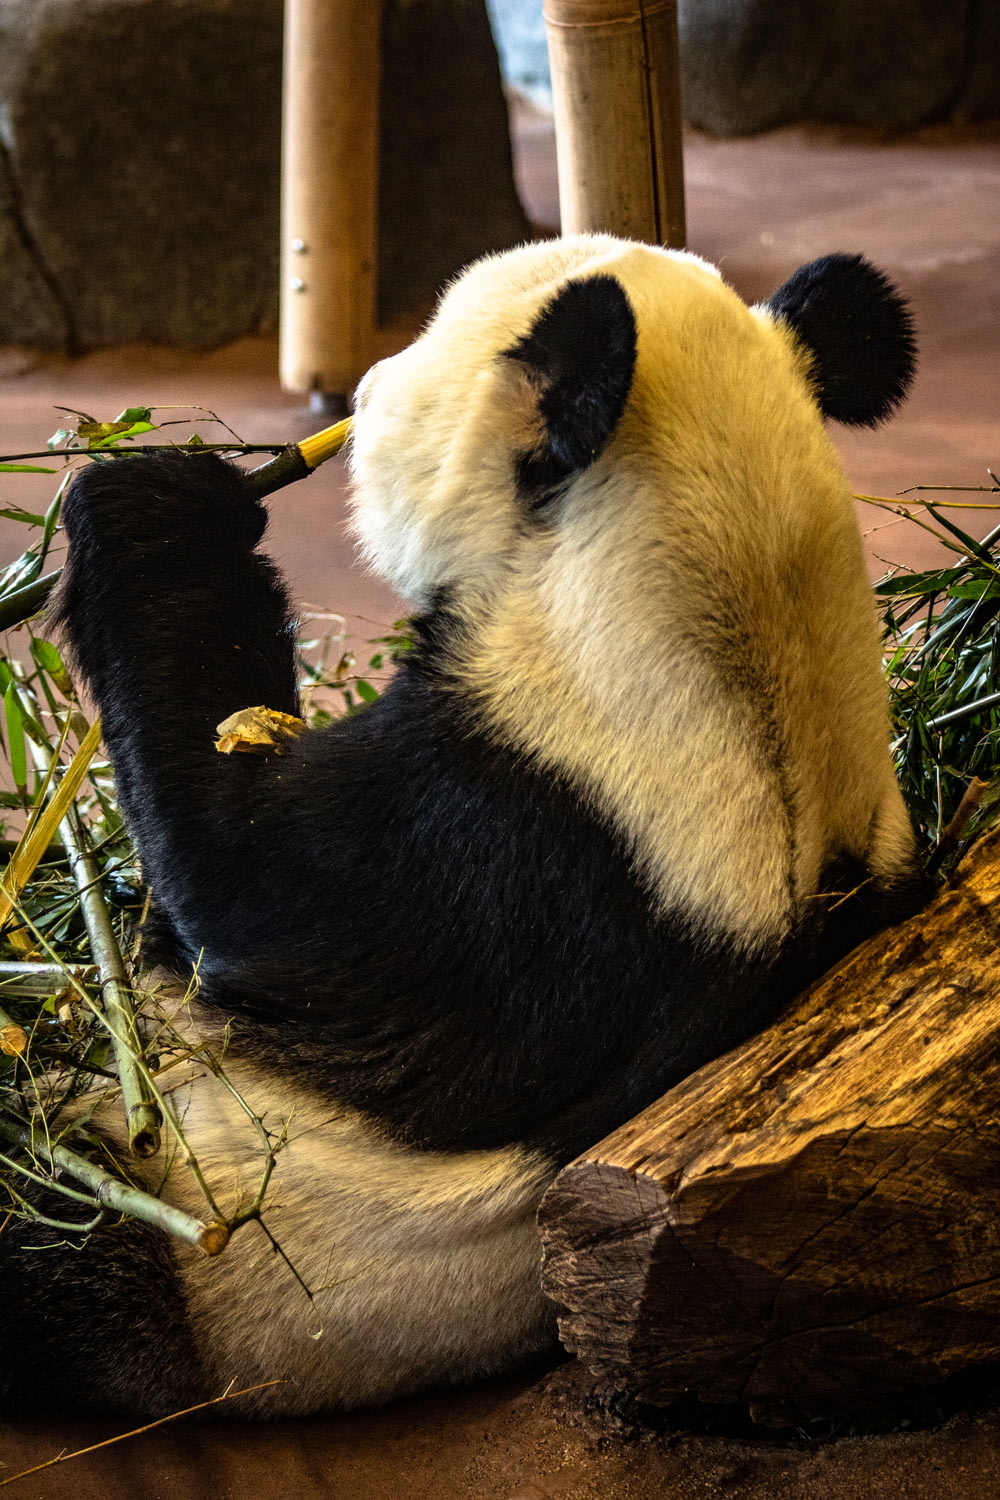 orso panda bianco e nero che mangia bambù